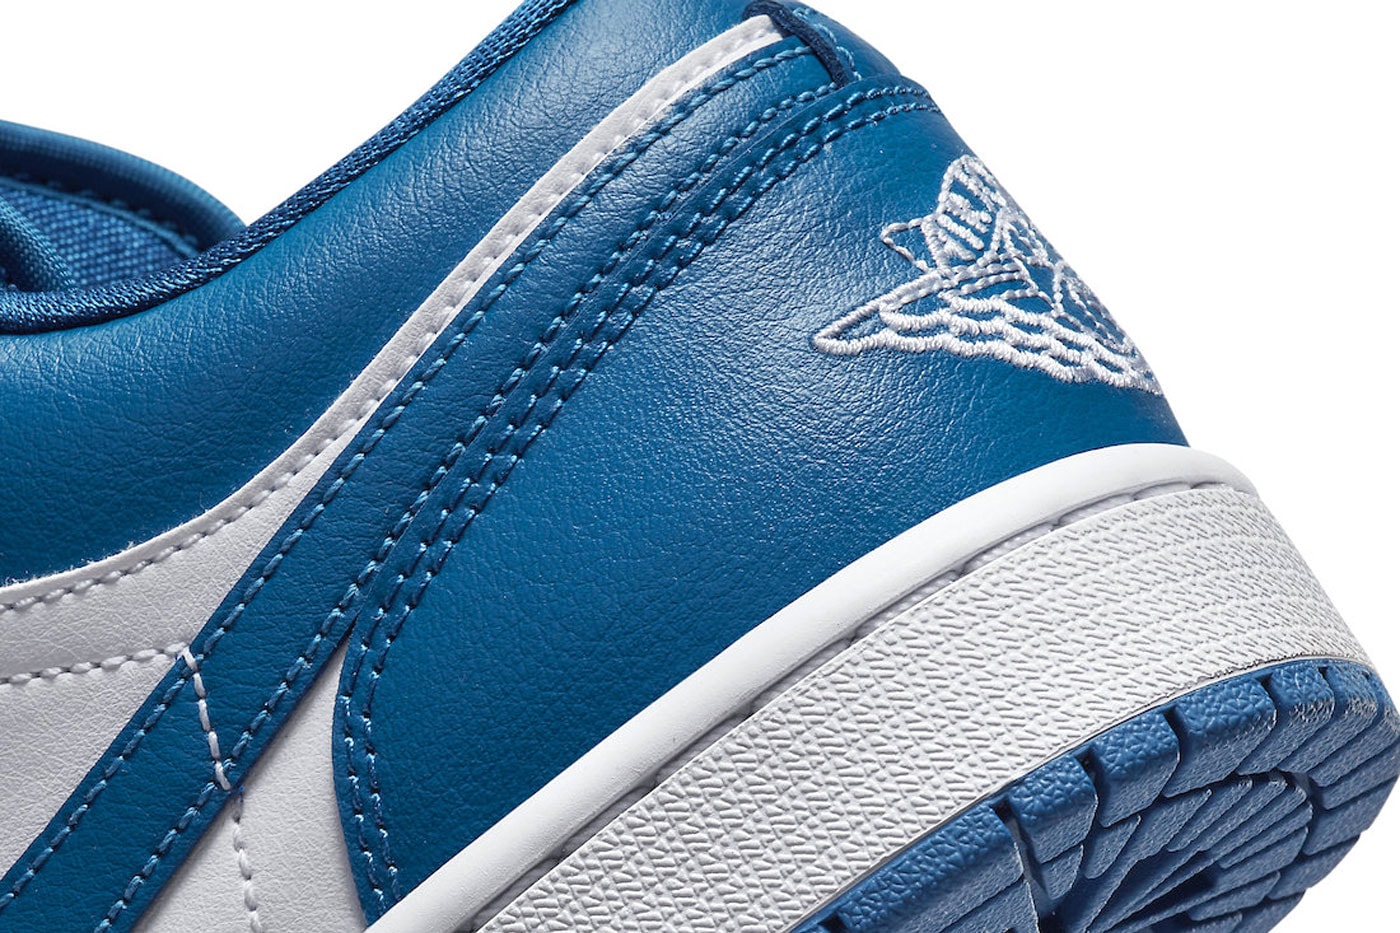 Nike Air Jordan 1 Low AJ1 Marina Blue Details